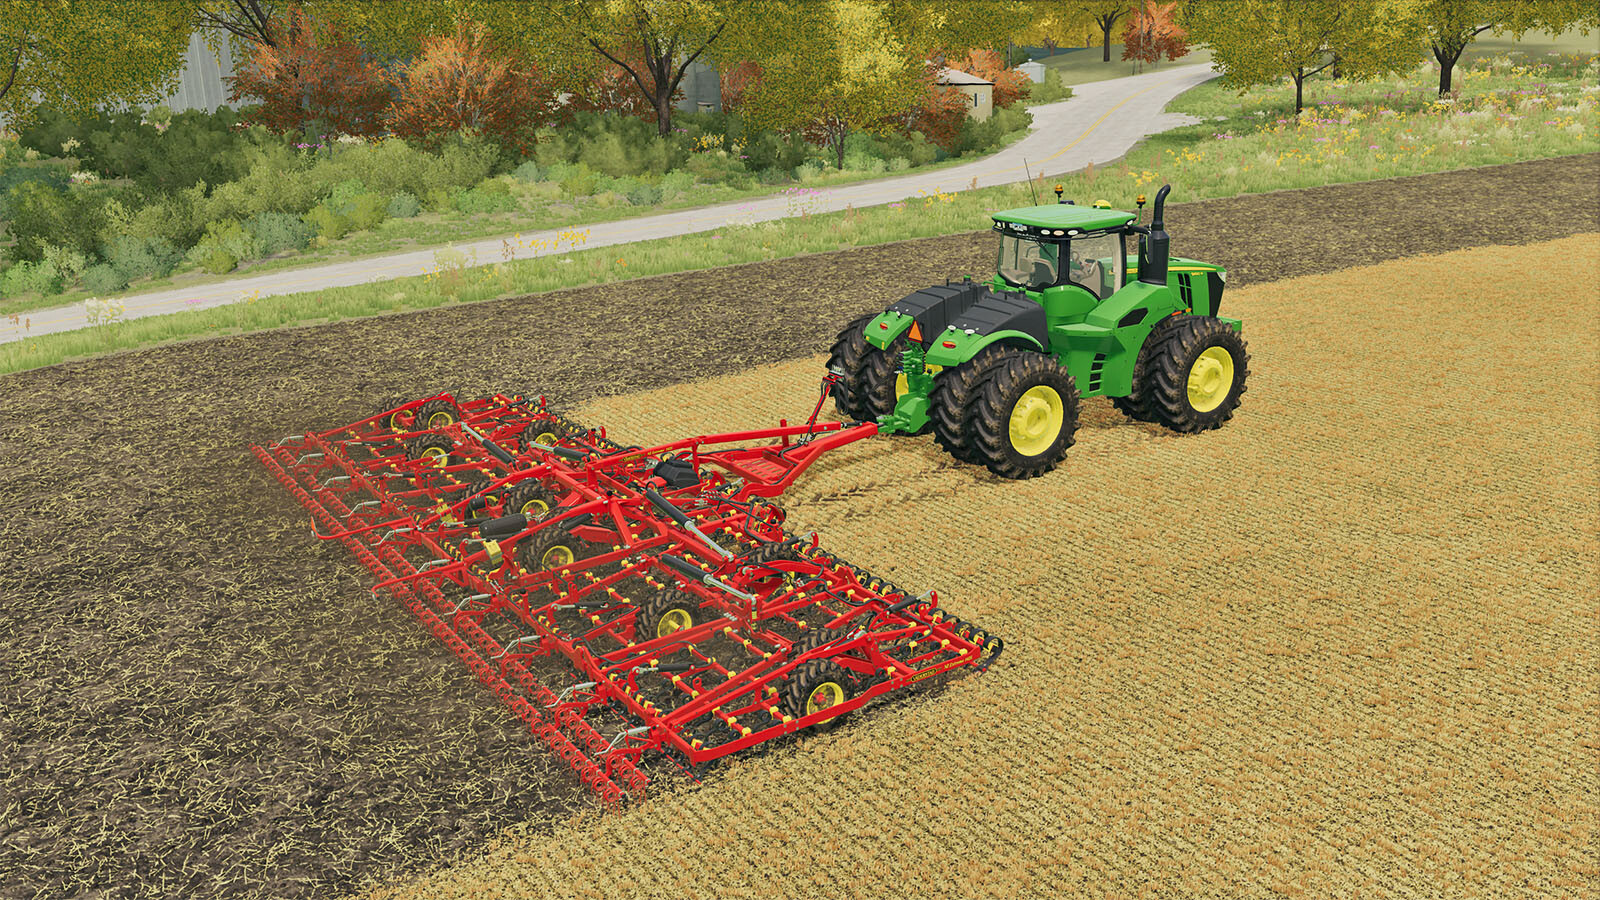 farming simulator 2013 steamunlocked download free